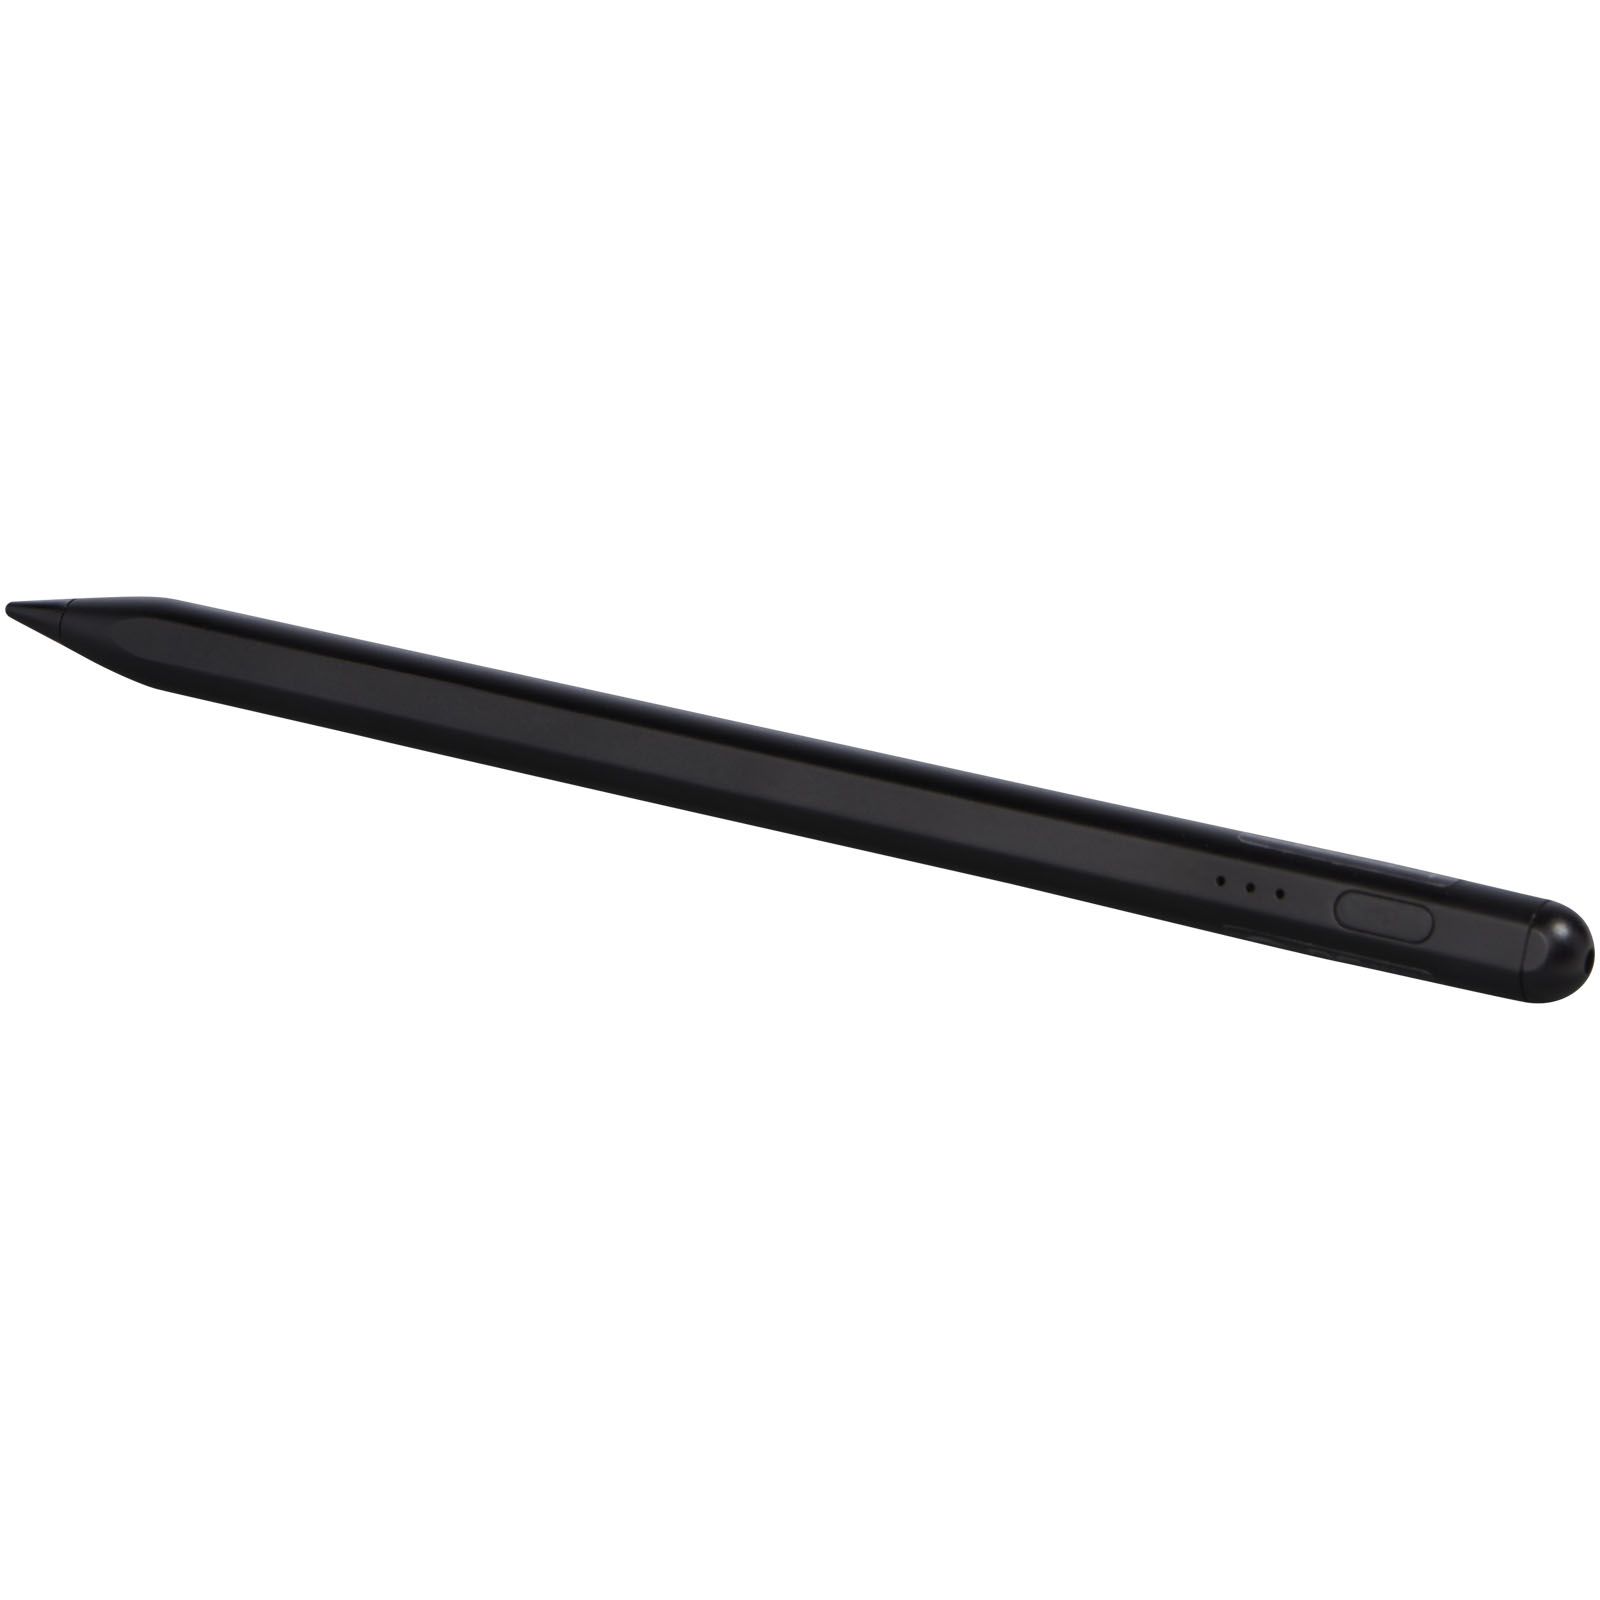 Exclusive Design Stylus Pen for iPads - Dorchester